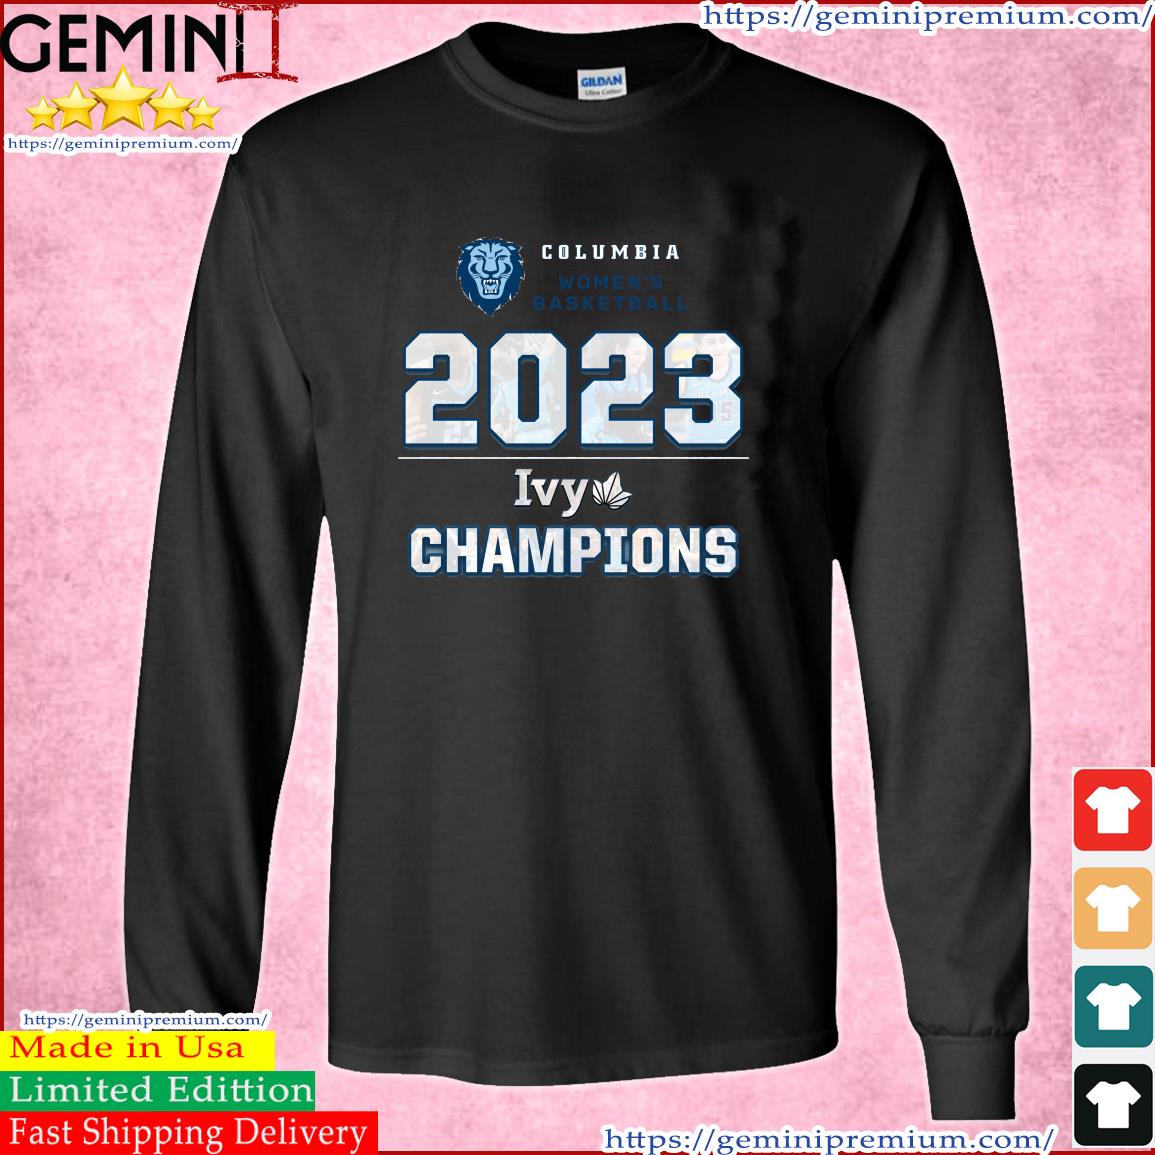 Columbia Women's Basketball 2023 Ivy League Champions Shirt Long Sleeve Tee